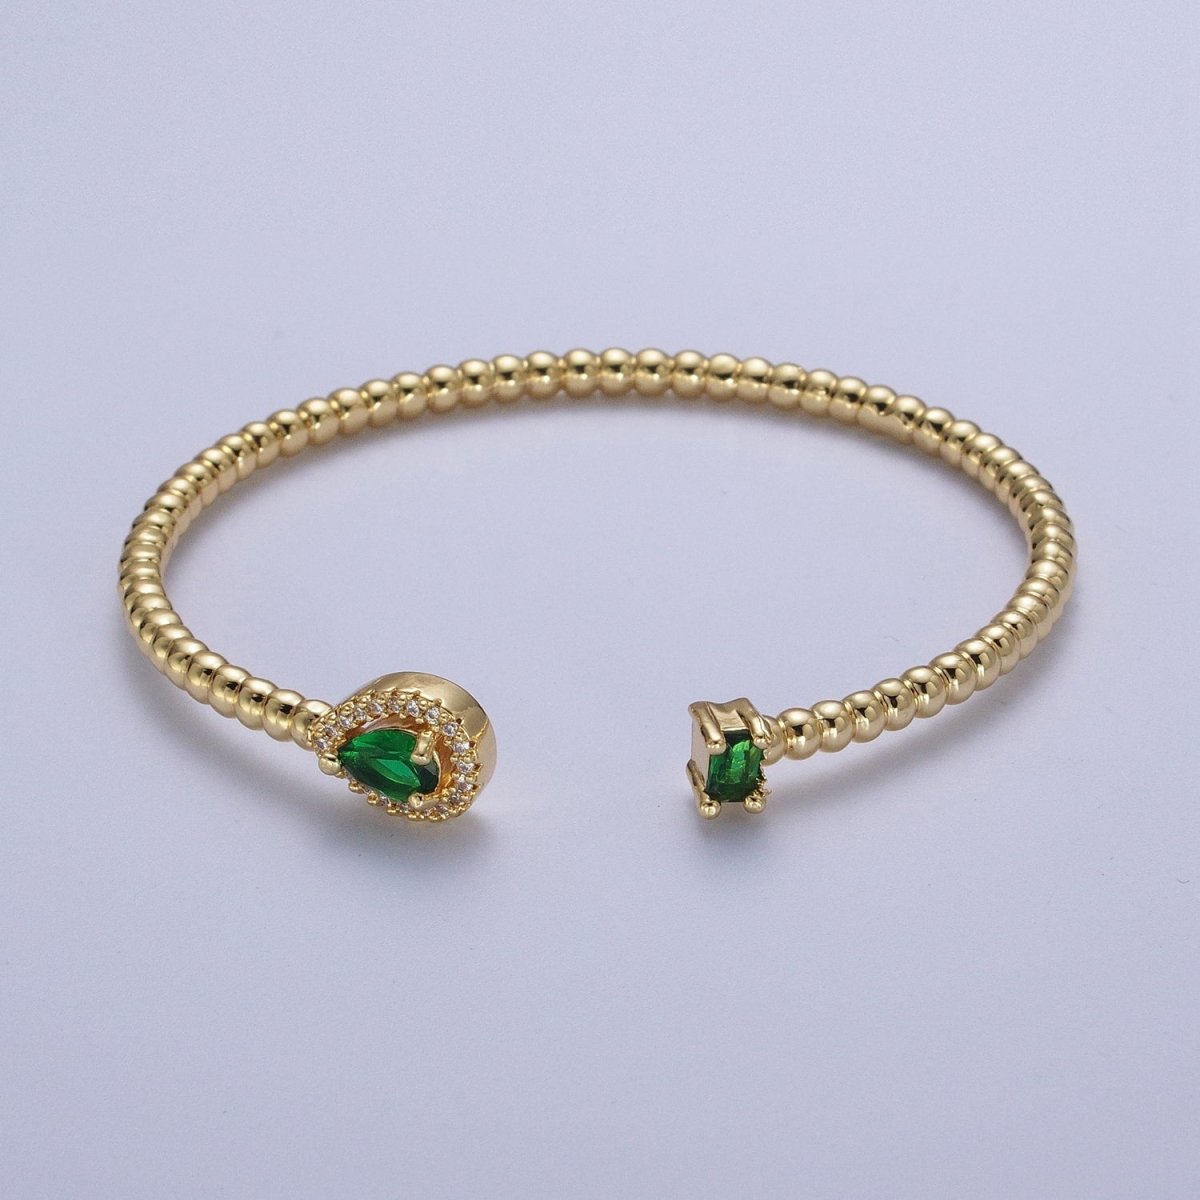 24K Gold Filled Beaded Green, Clear, Fuchsia Teardrop Baguette Cubic Zirconia Bangle Bracelet | WA-1170 WA-1171 WA-1172 Clearance Pricing - DLUXCA